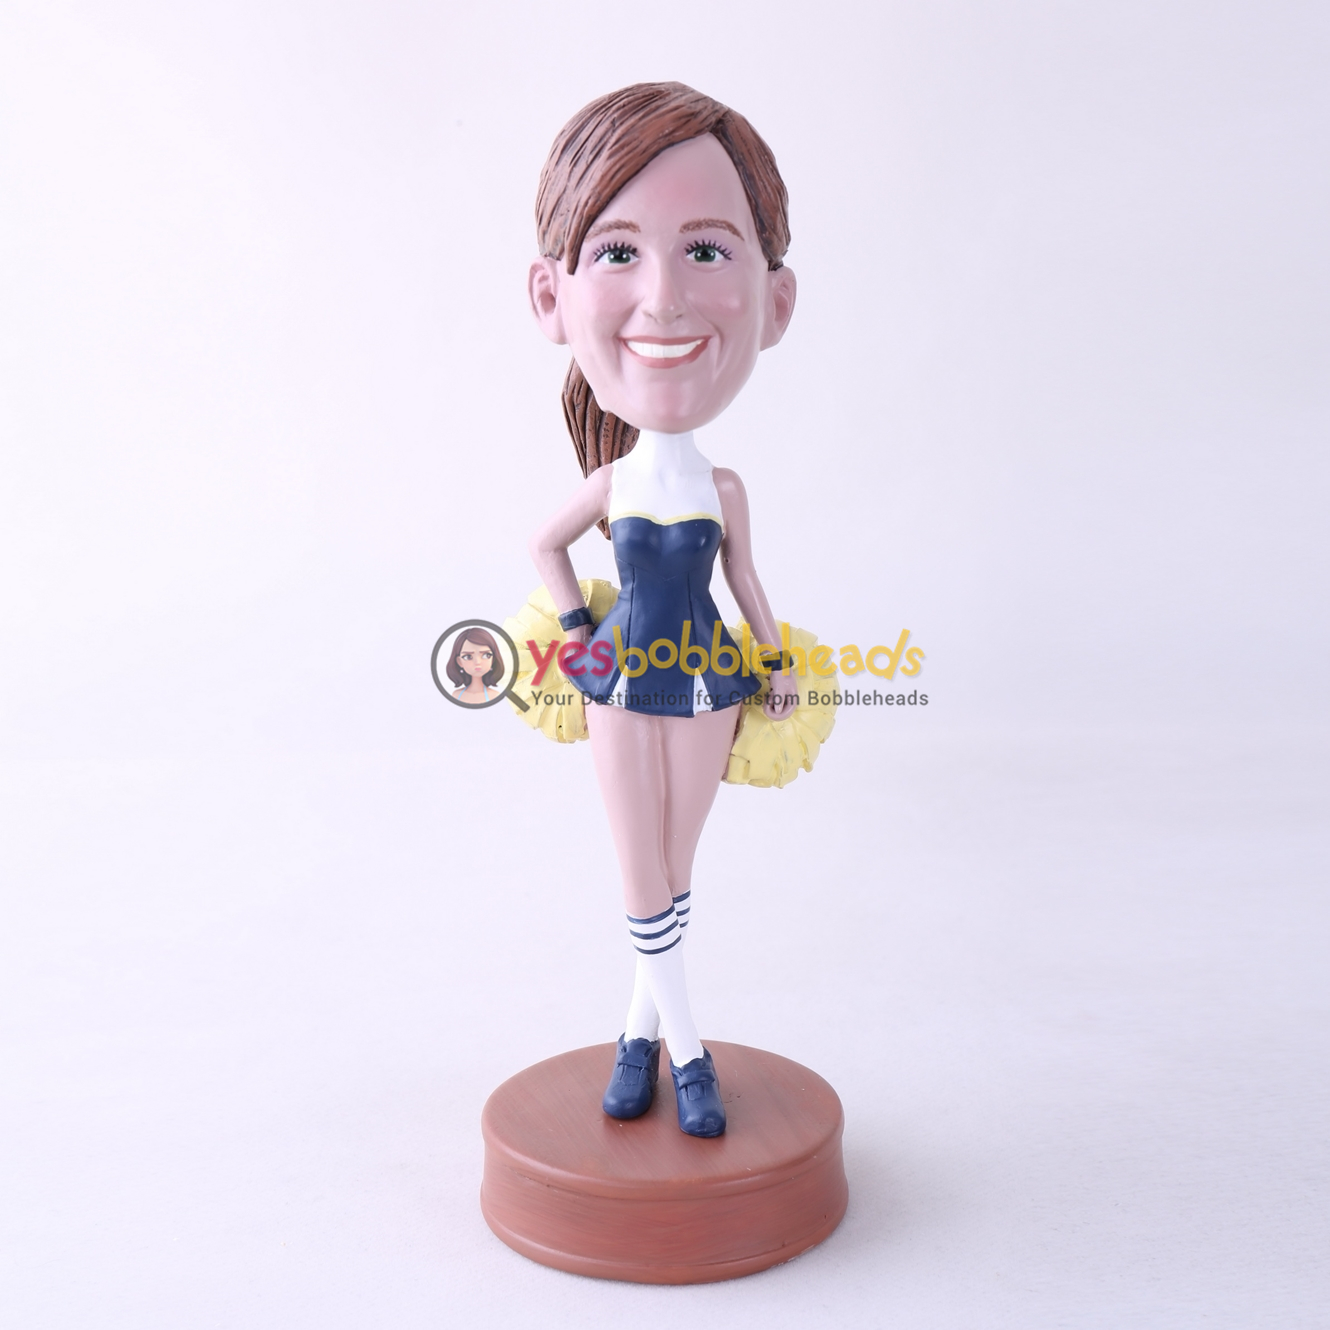 Picture of Custom Bobblehead Doll: Cheerleader Dancer